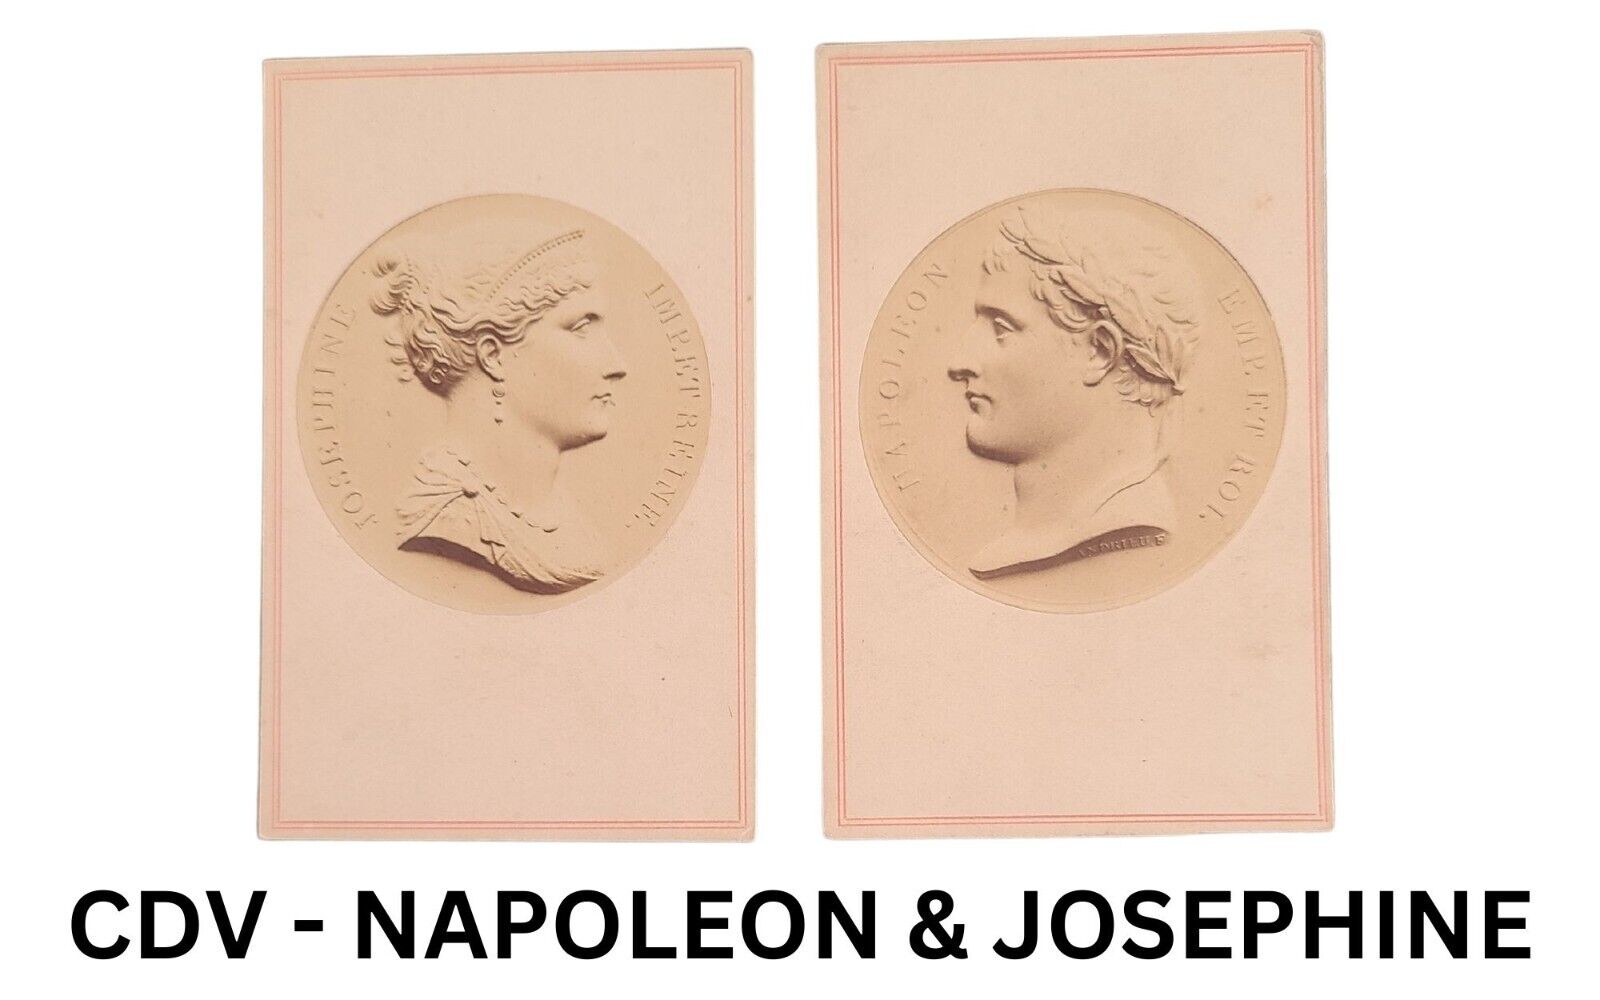 CDV PHOTOGRAPH - NAPOLEON & JOSEPHINE (228)